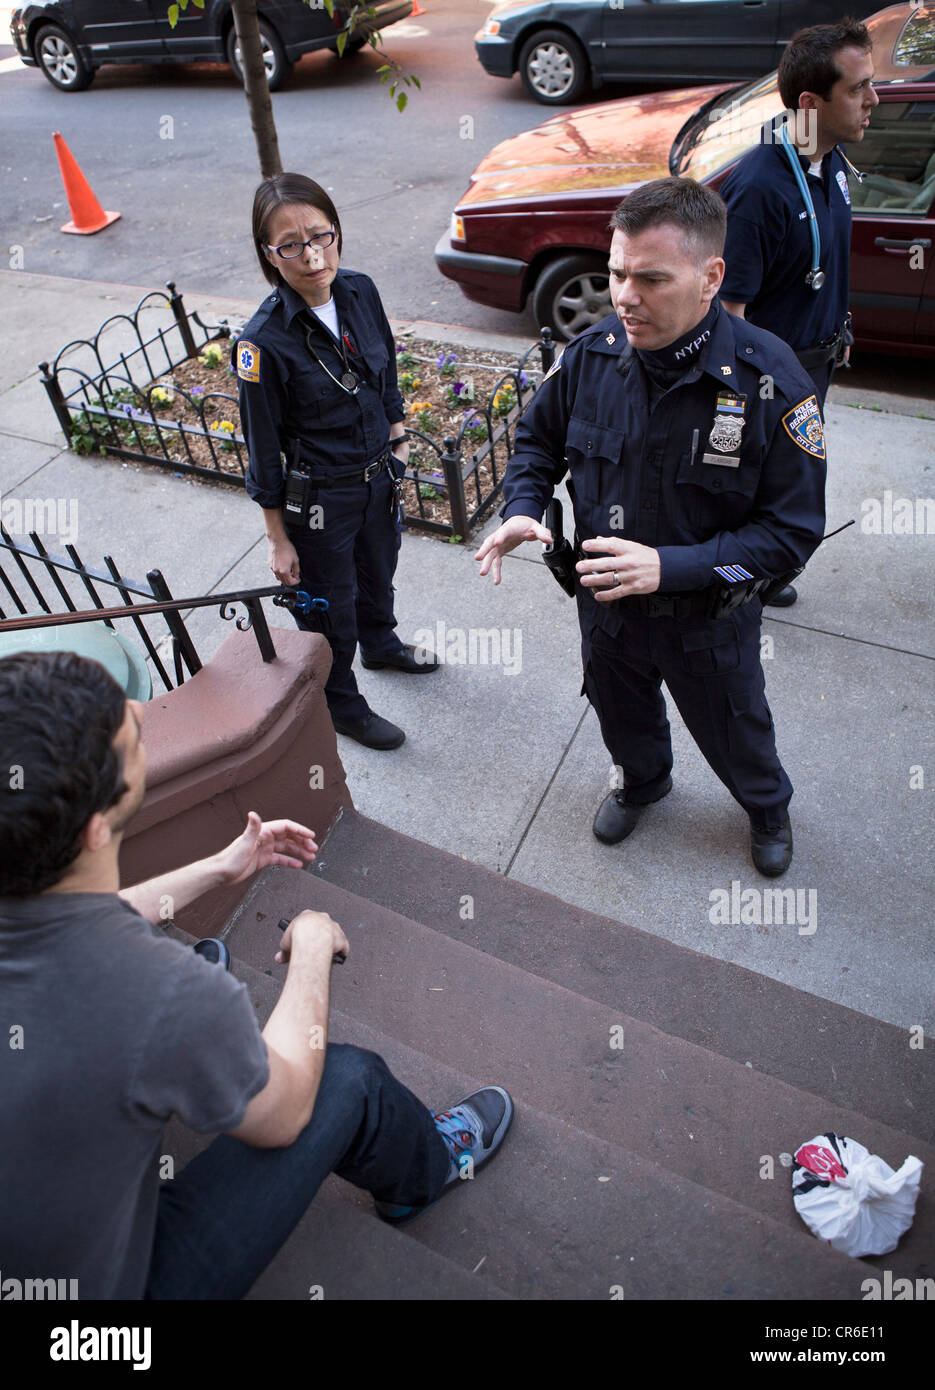 Police in New York City investigate an altercation involving 2 men. Stock Photo